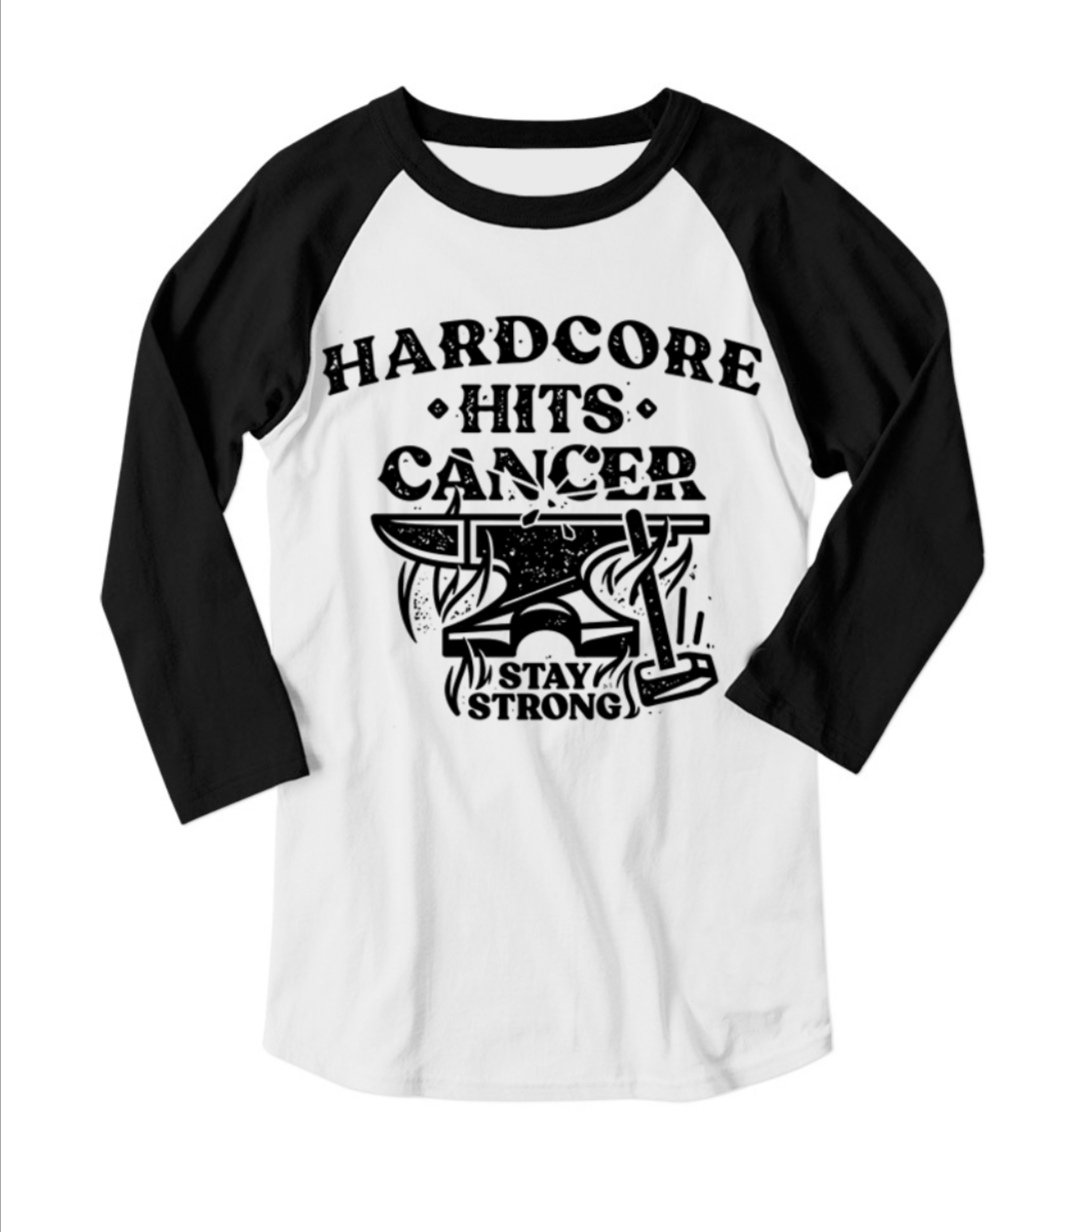 Nueva camiseta: Hardcore Hits Cancer STAY STRONG